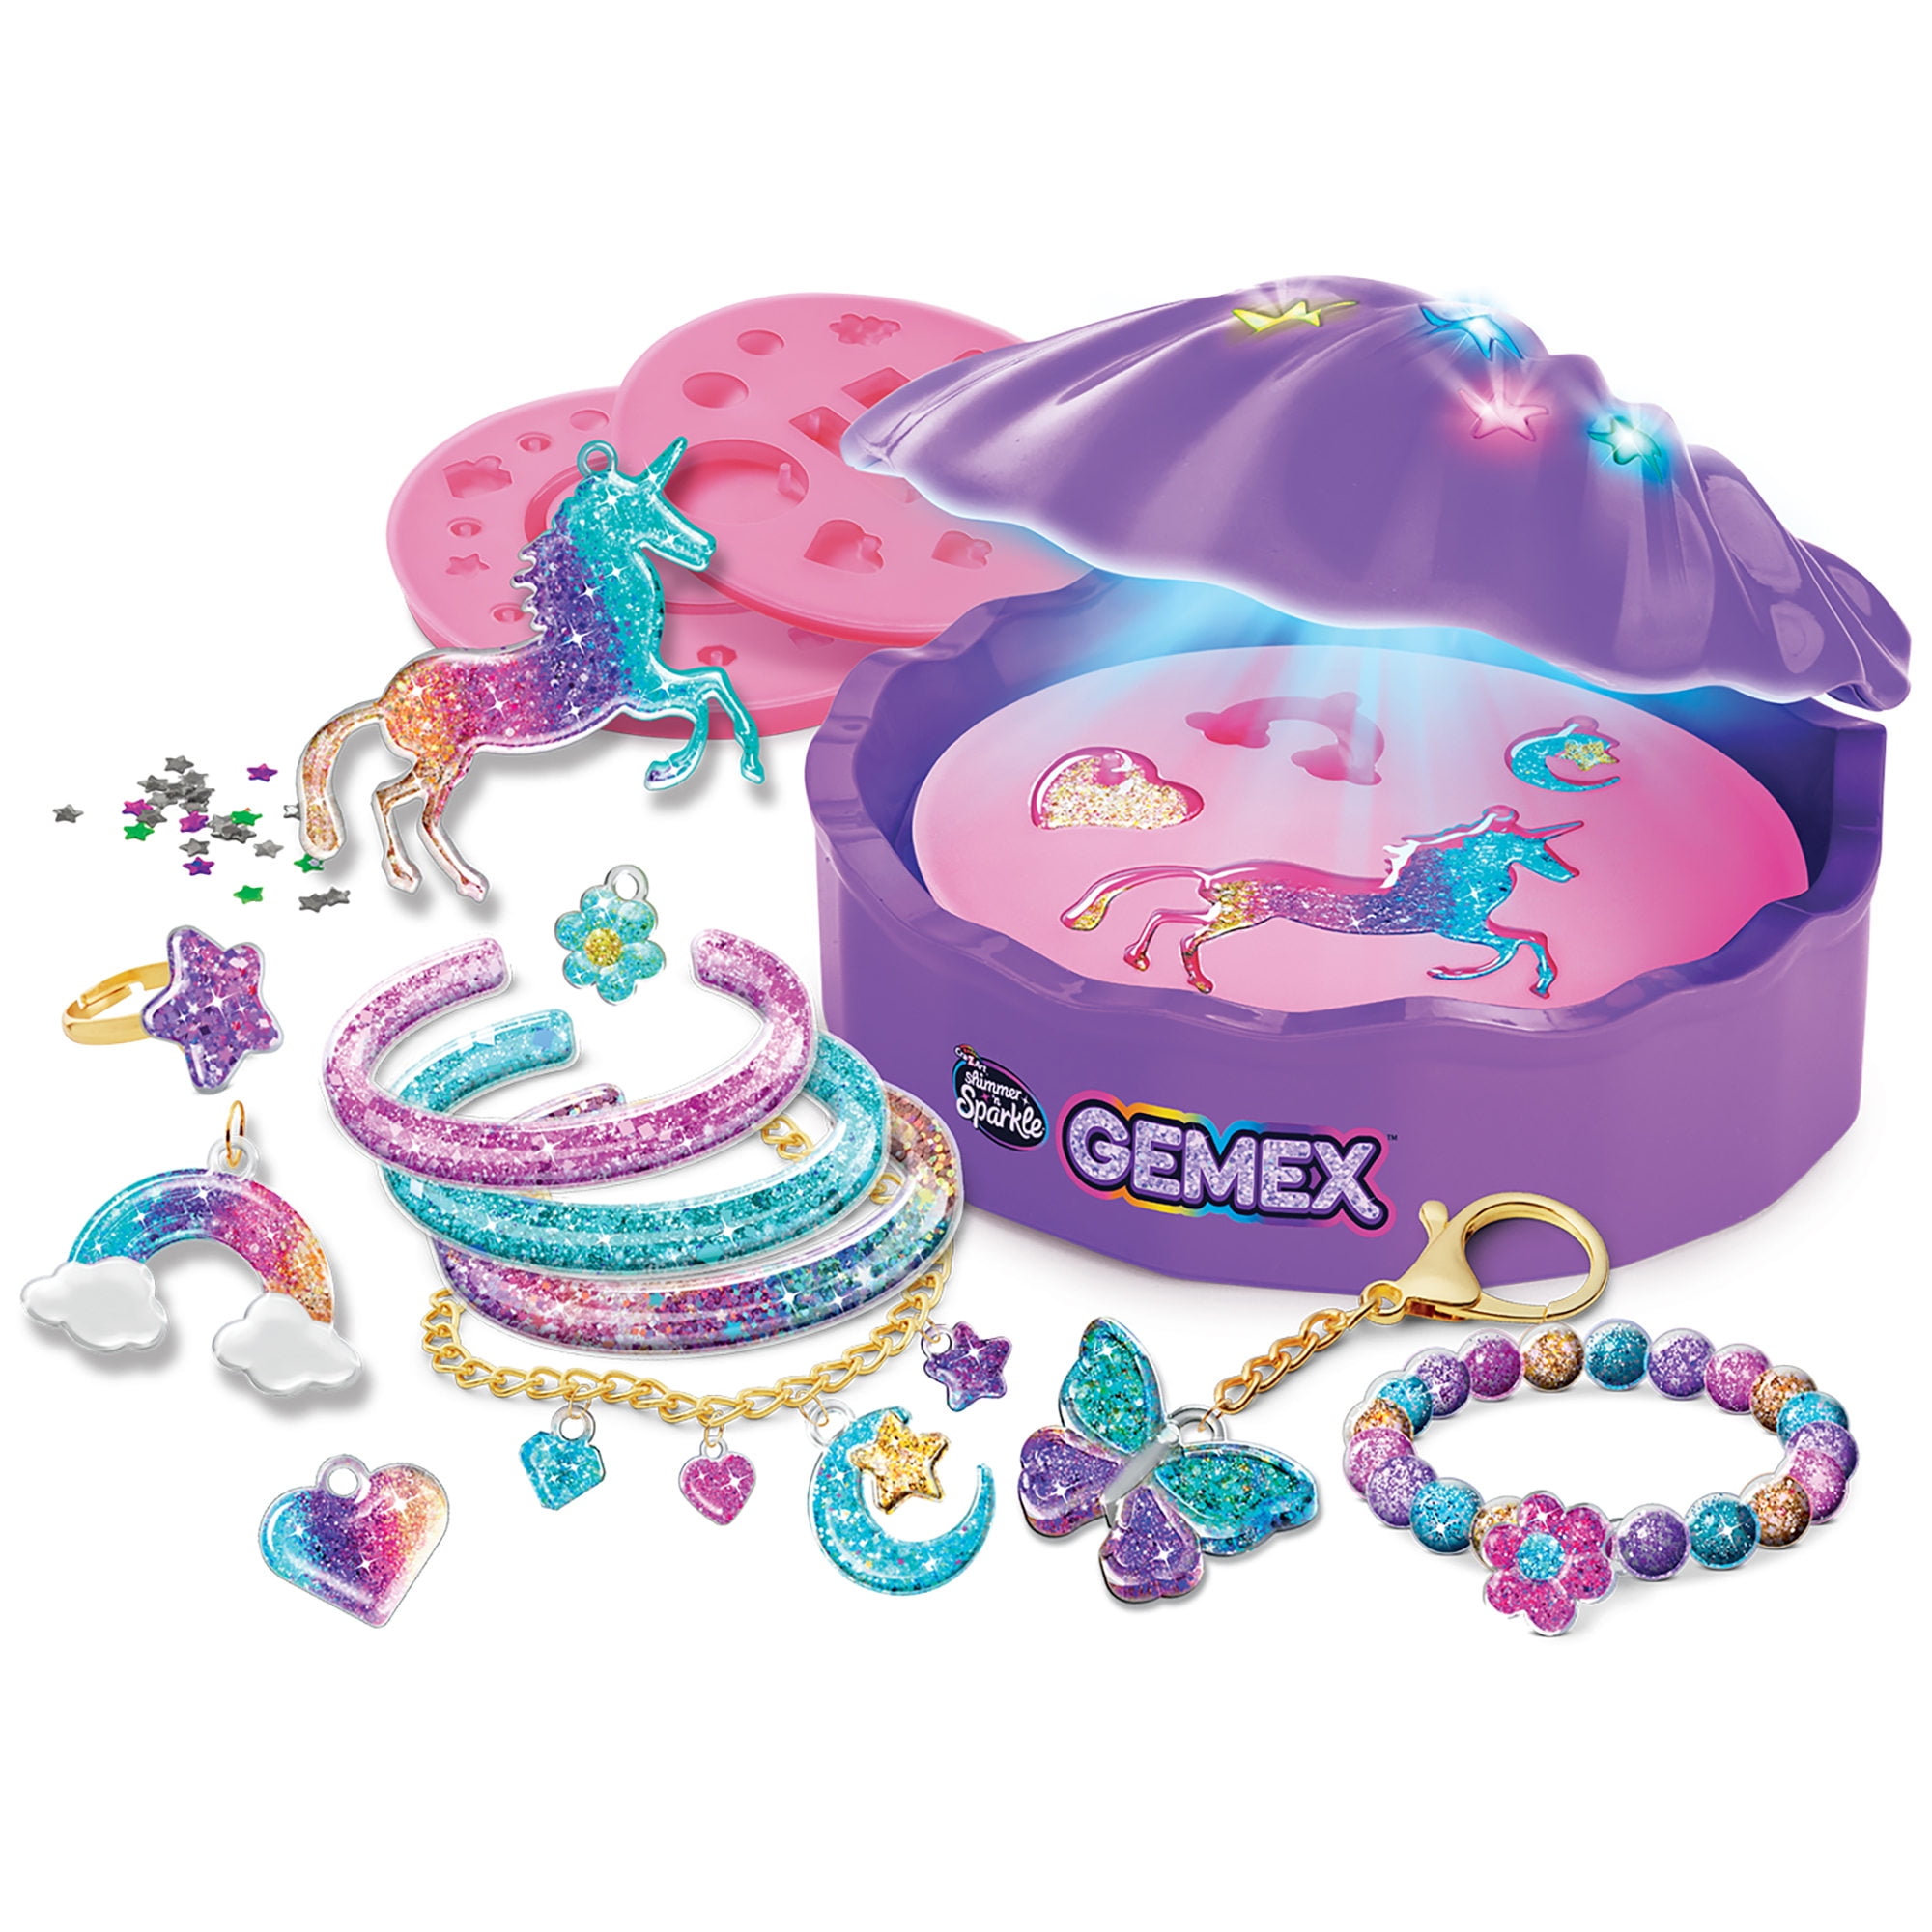 MYO Glittery Jewelry with the Gemex Gel Creations Studio - The Toy Insider